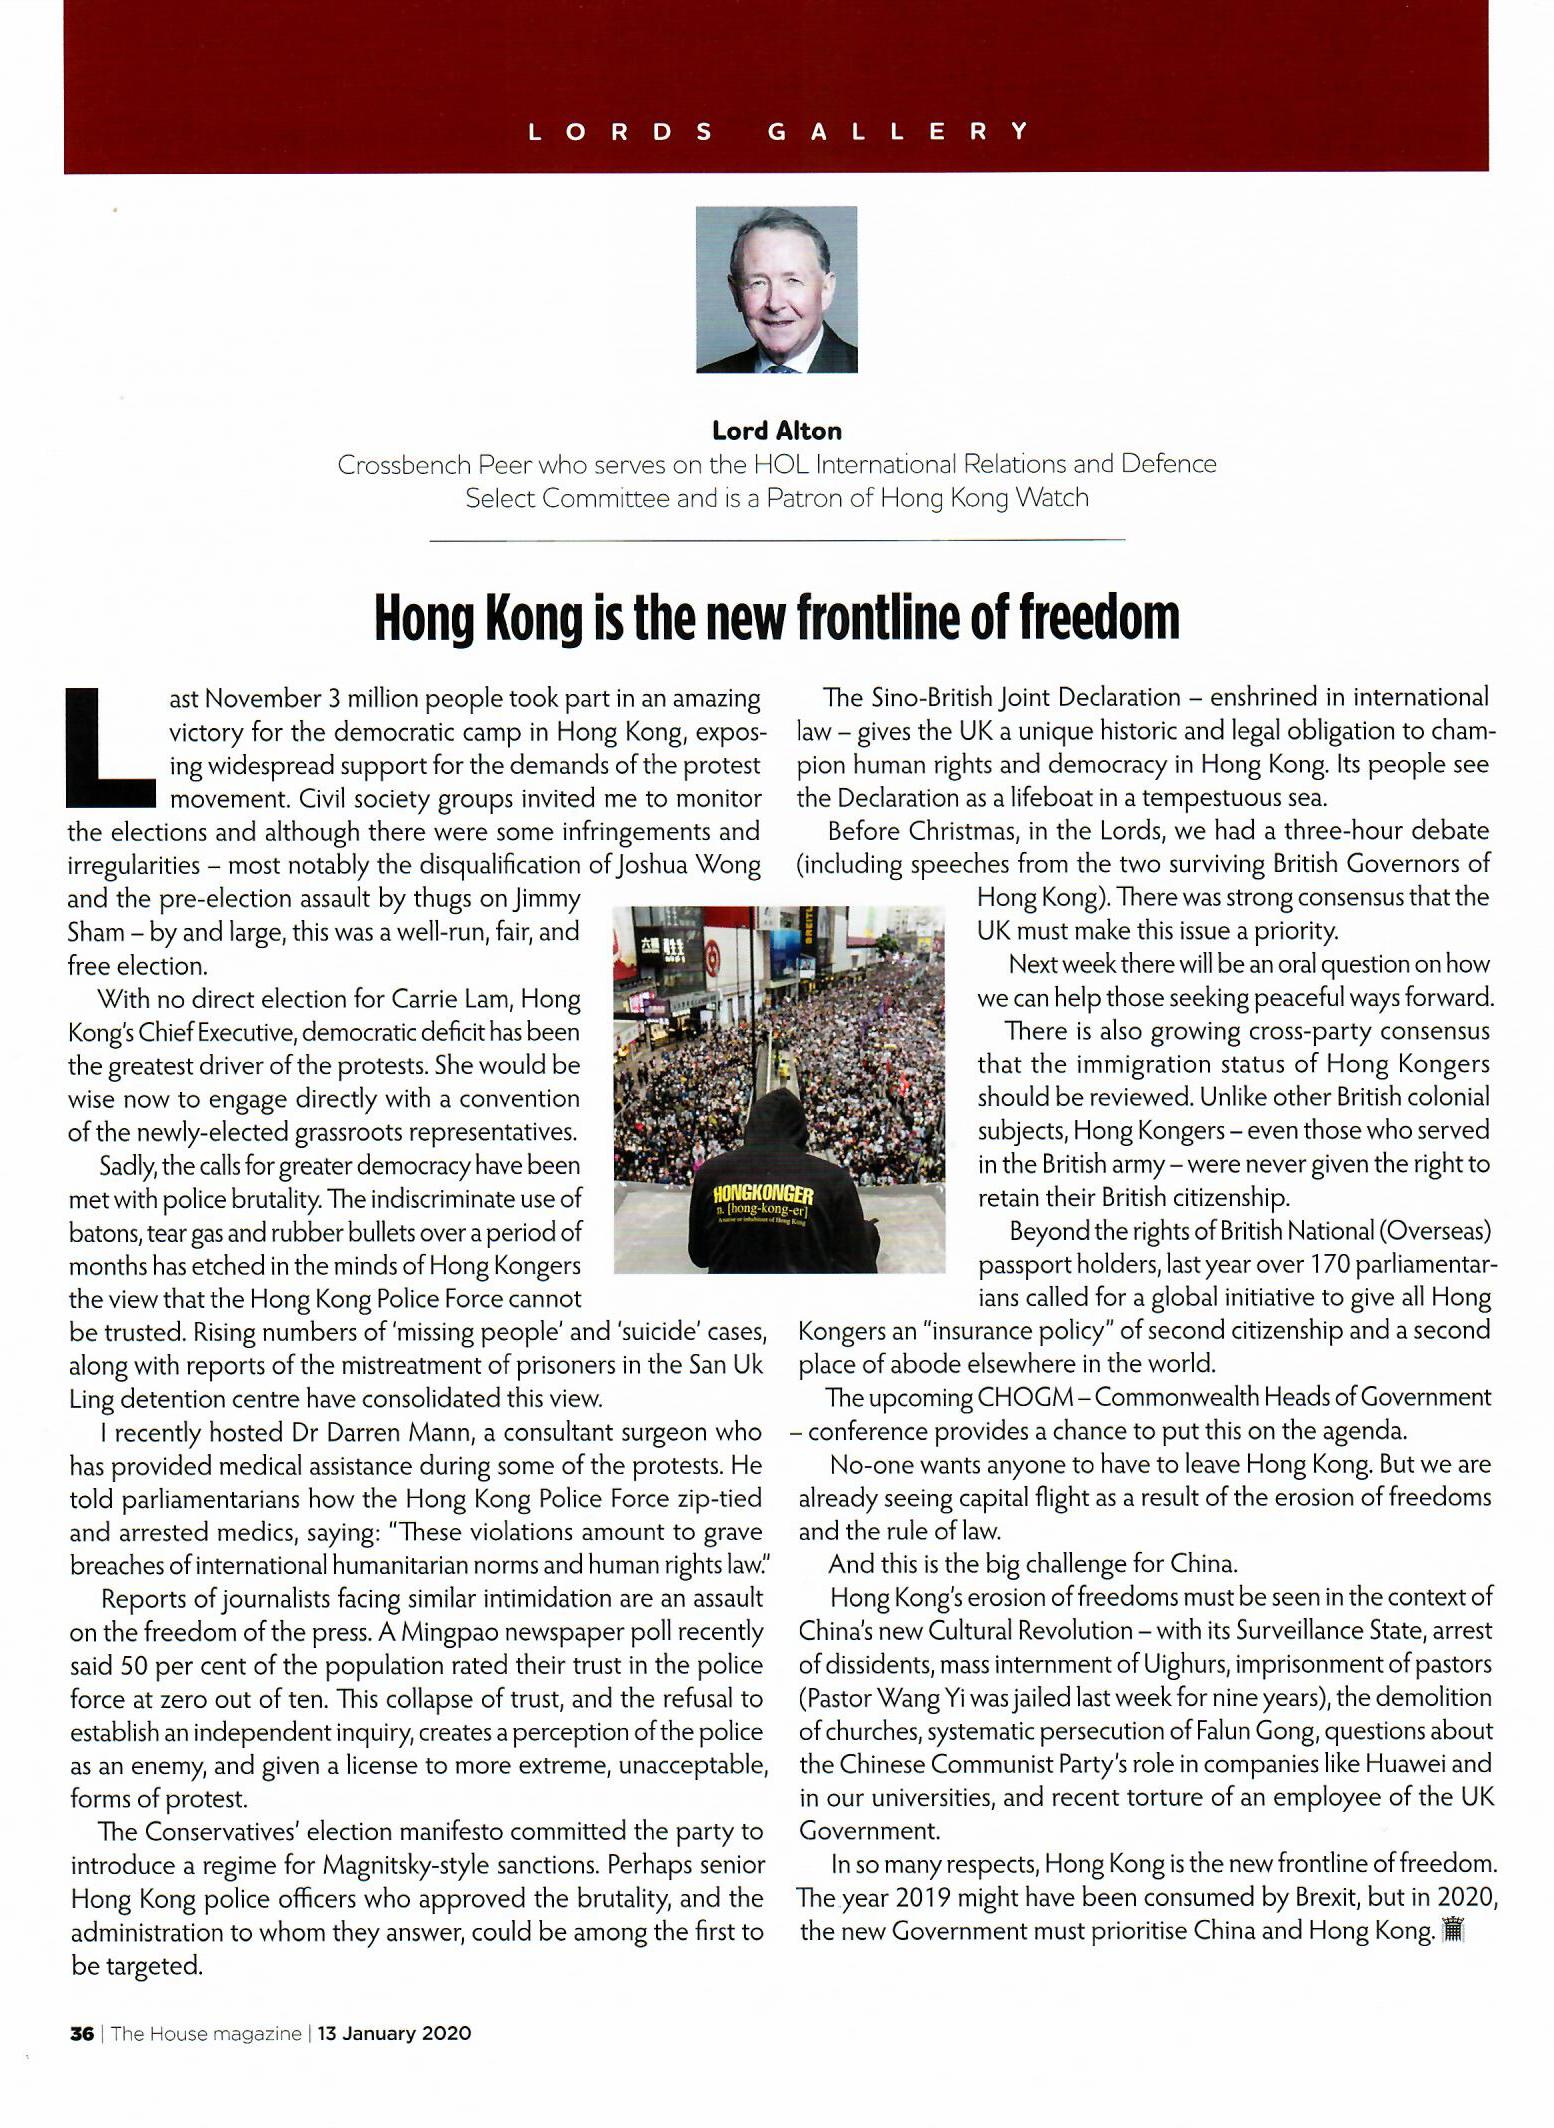 House Magazine Hong Kong the Frontline of Freedom Jan 14 2020